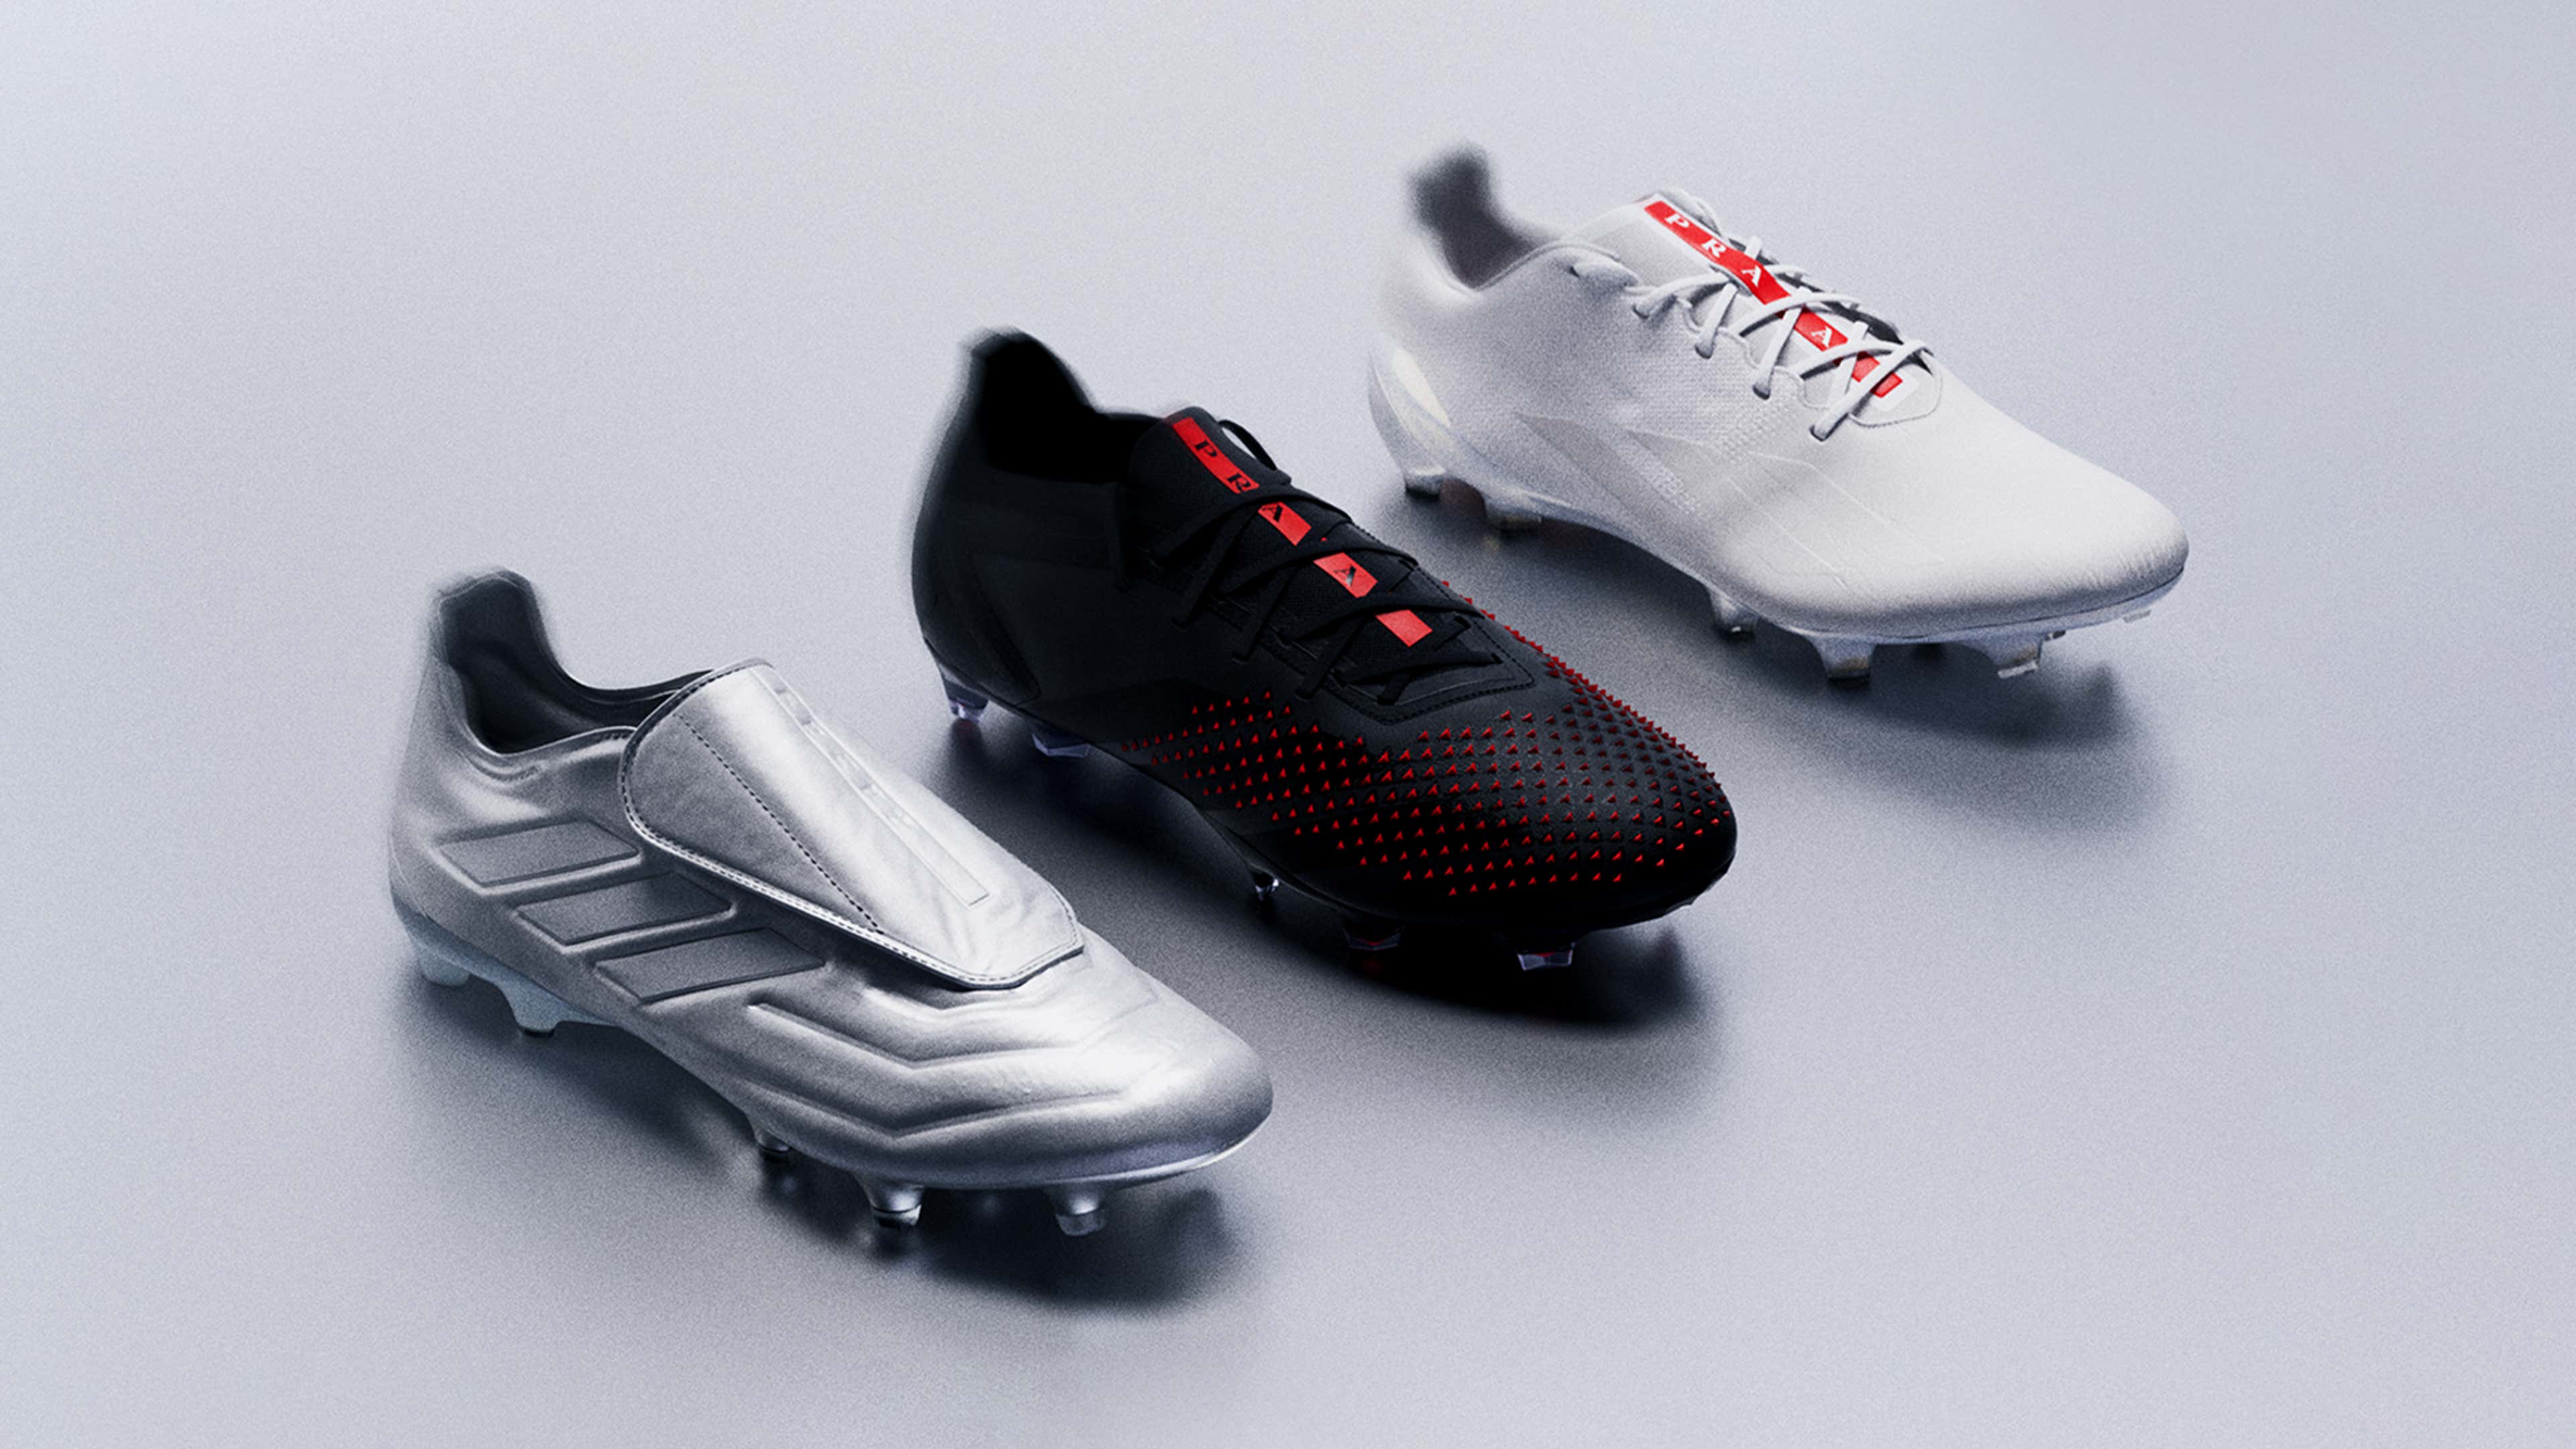 Invertir Rebajar antena adidas and Prada drop limited-edition football boot collection | Goal.com US